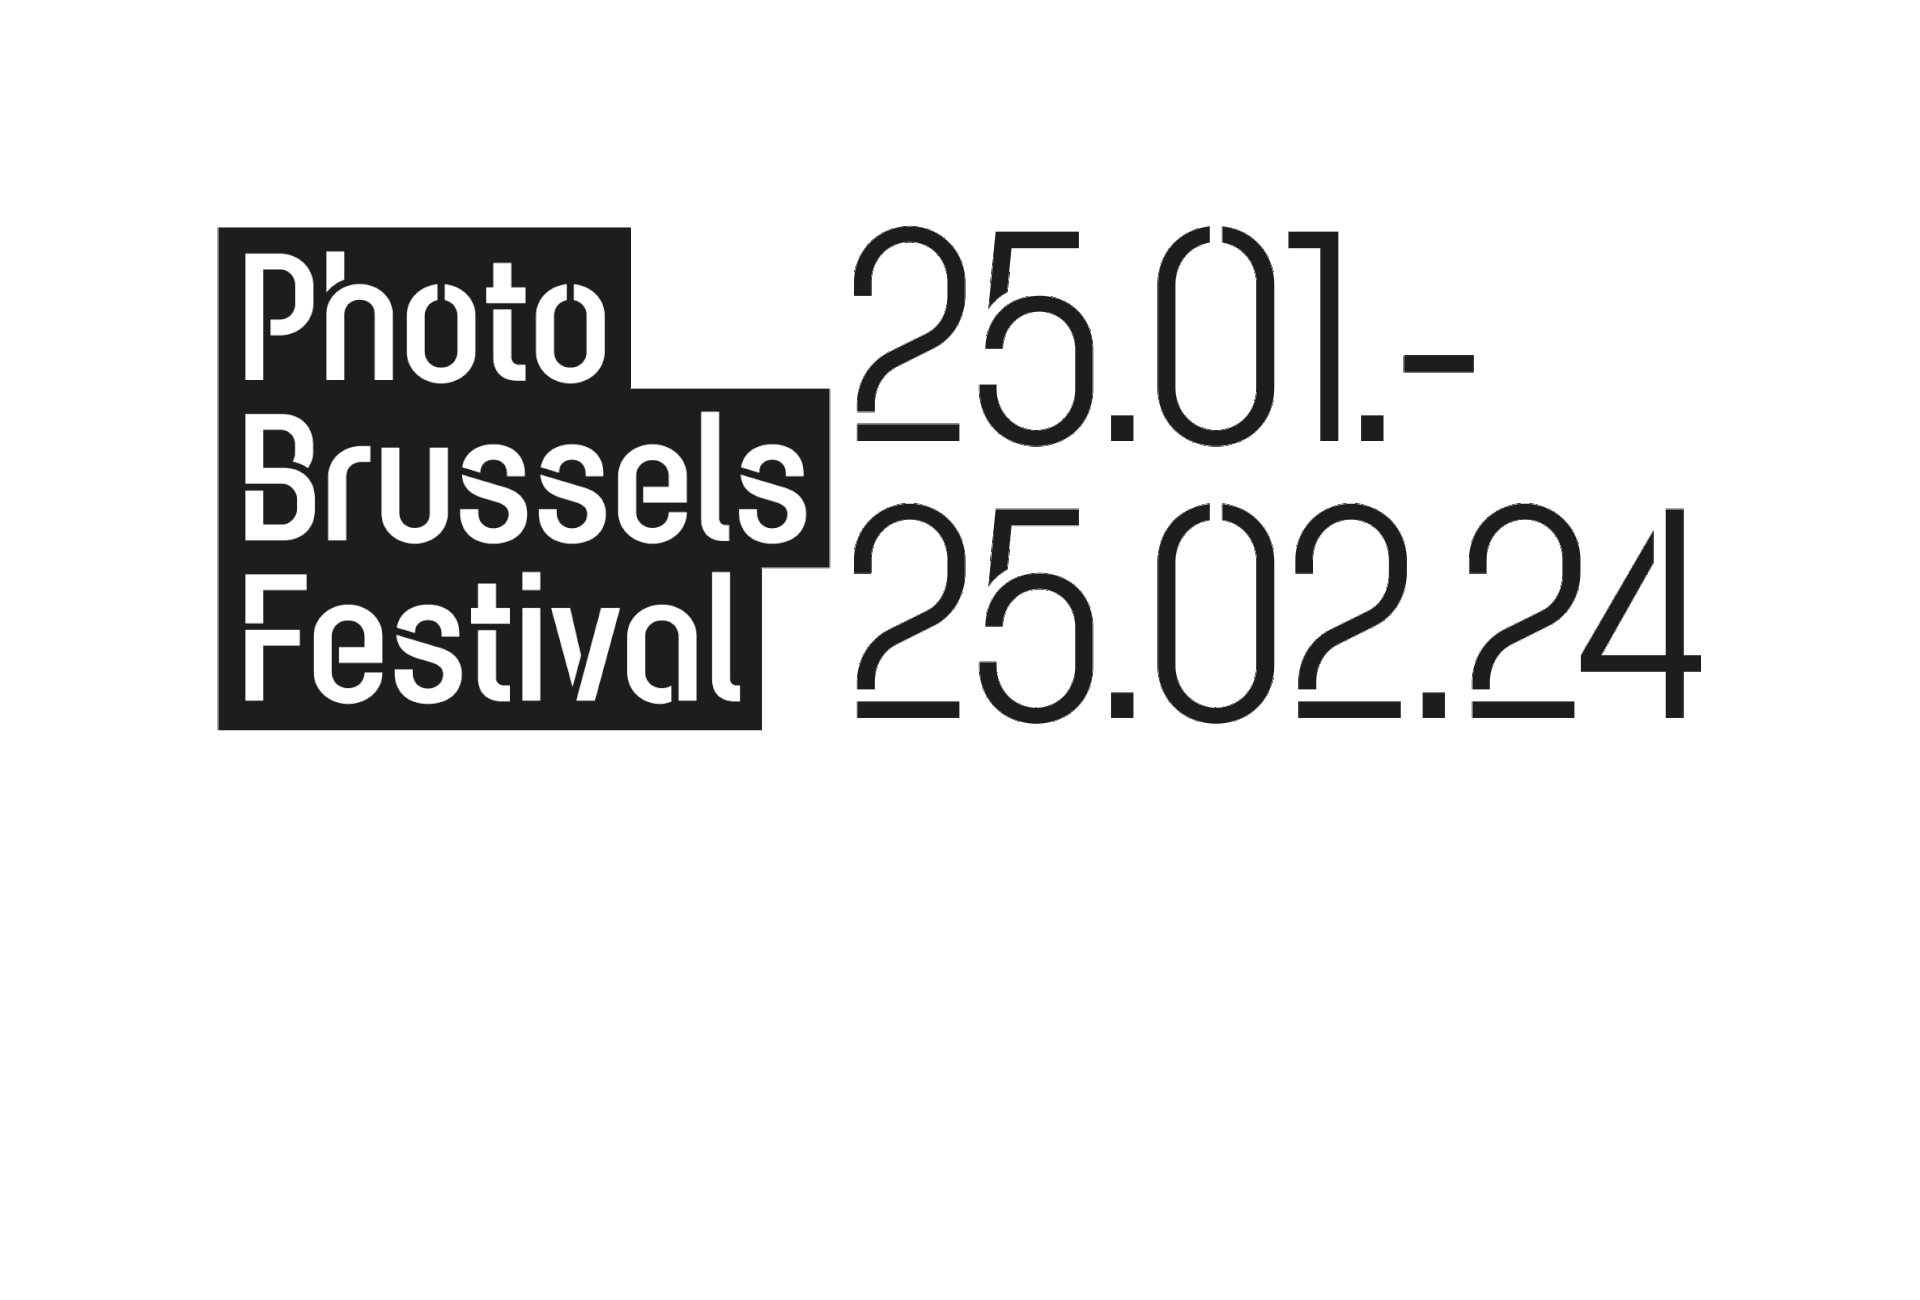 PhotoBrussels Festival |